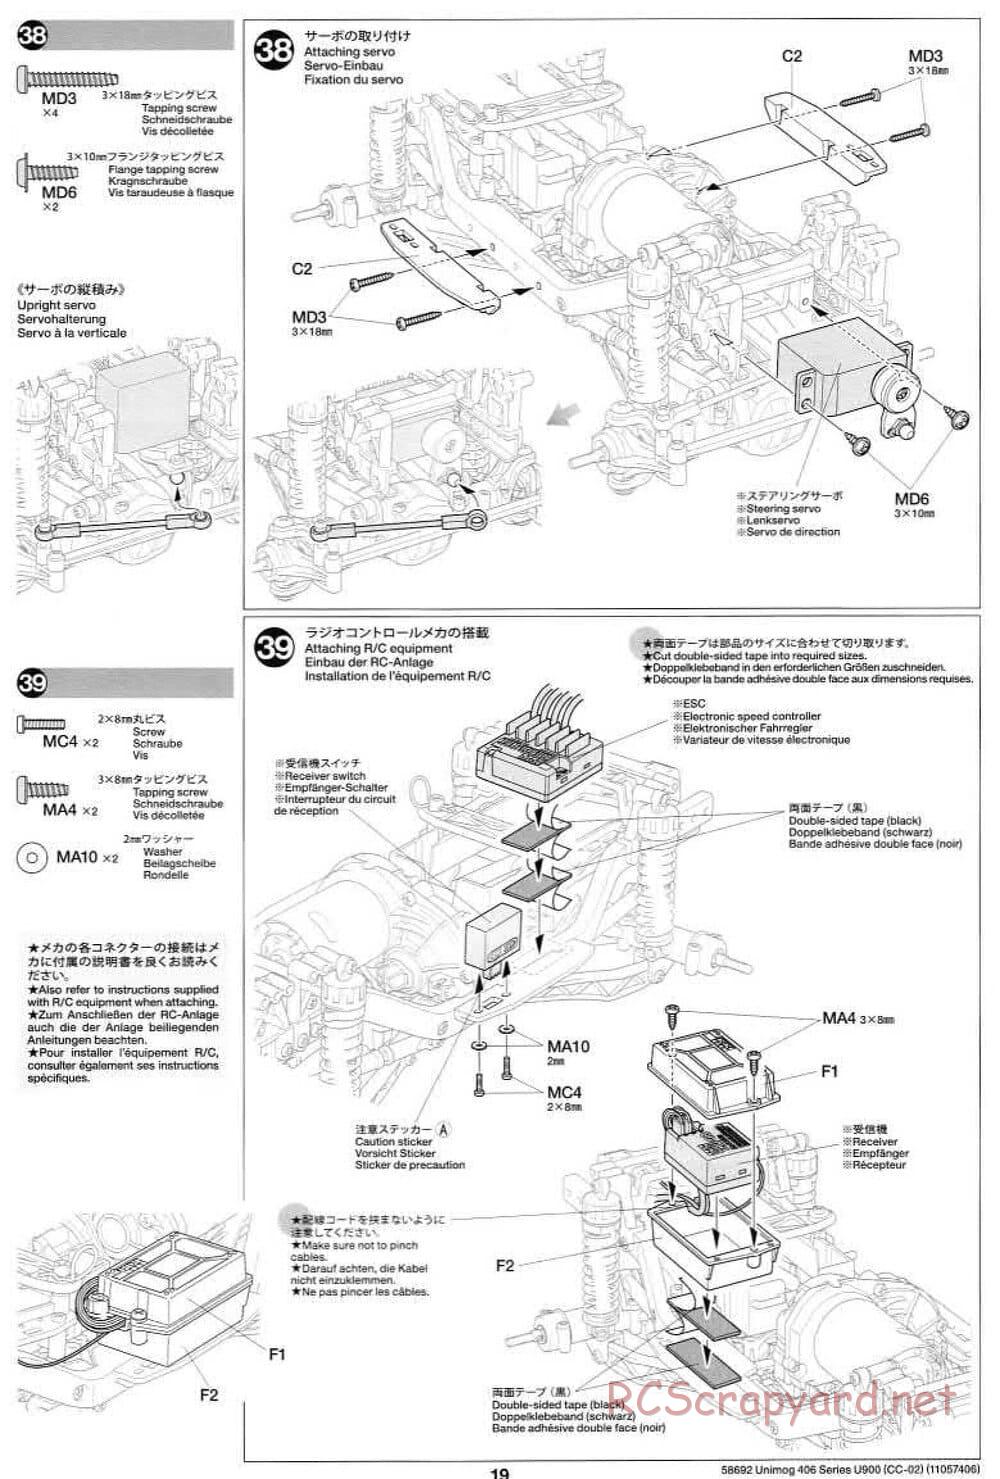 Tamiya - Mercedes-Benz Unimog 406 Series U900 - CC-02 Chassis - Manual - Page 19